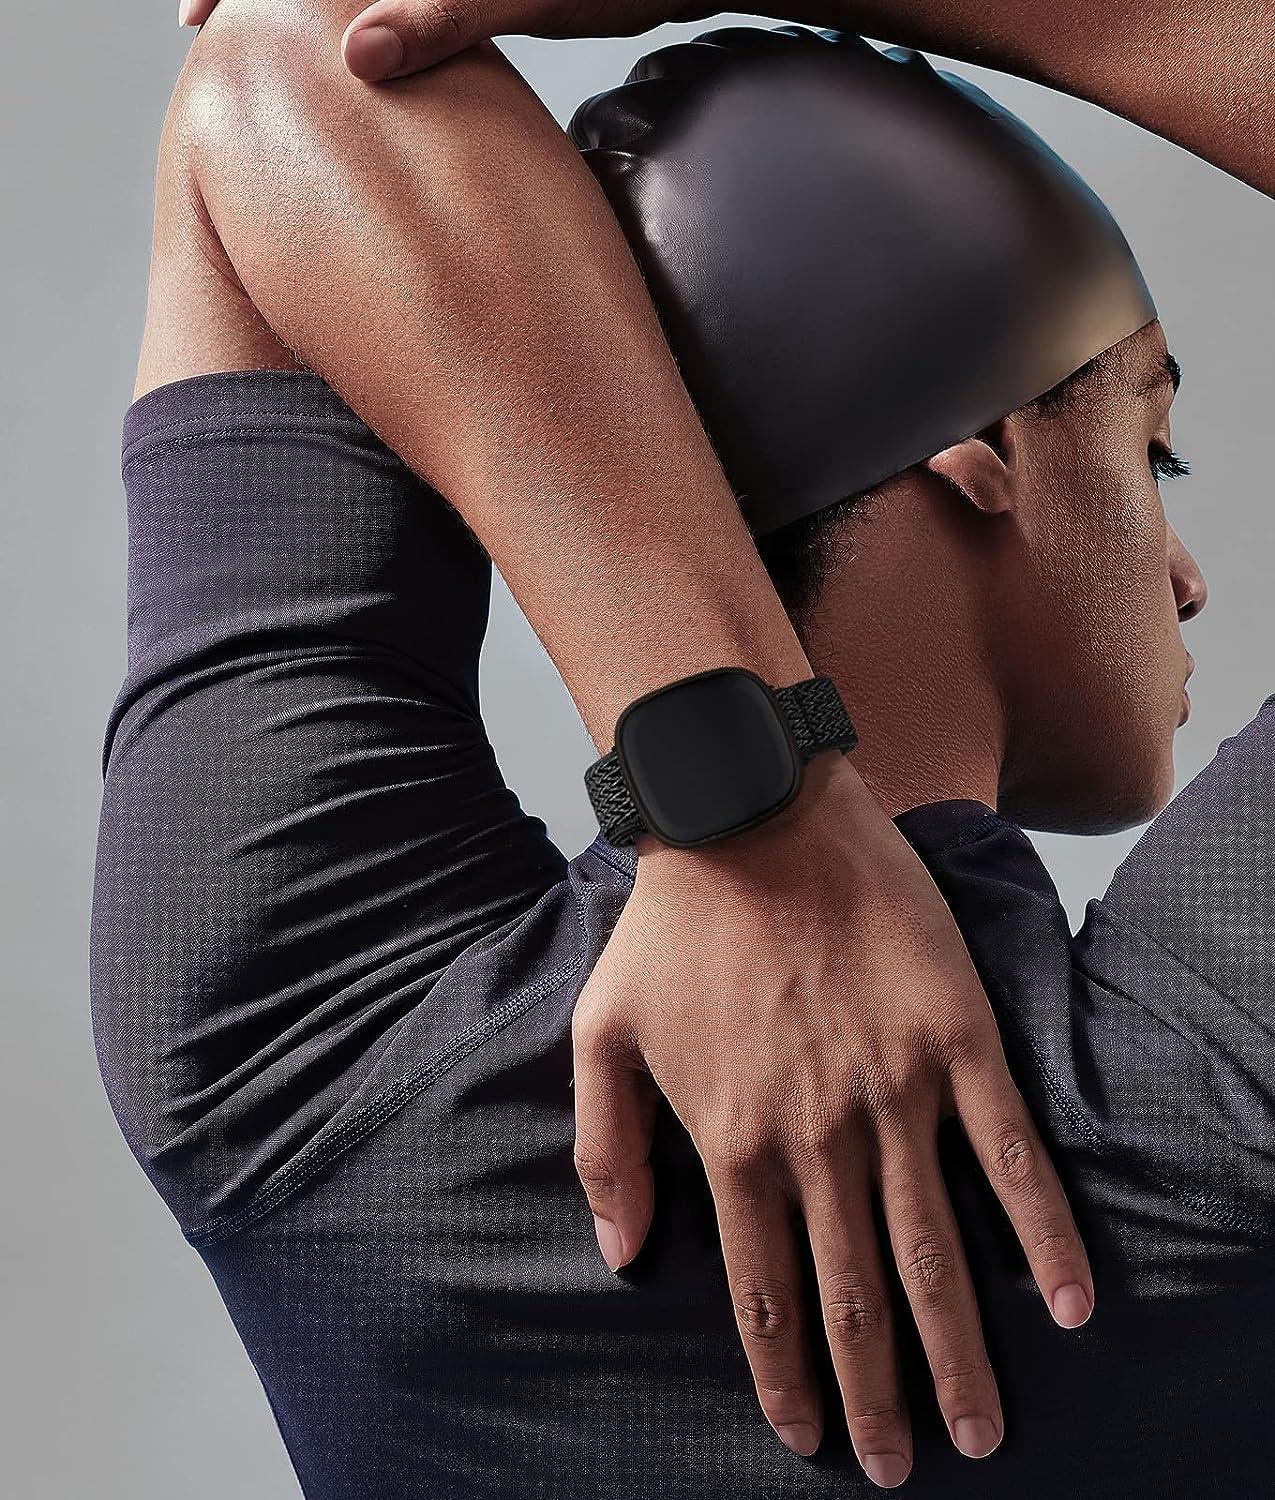 Nylon Loop Strap for Fitbit Versa 2 versa Smartwatch replacment